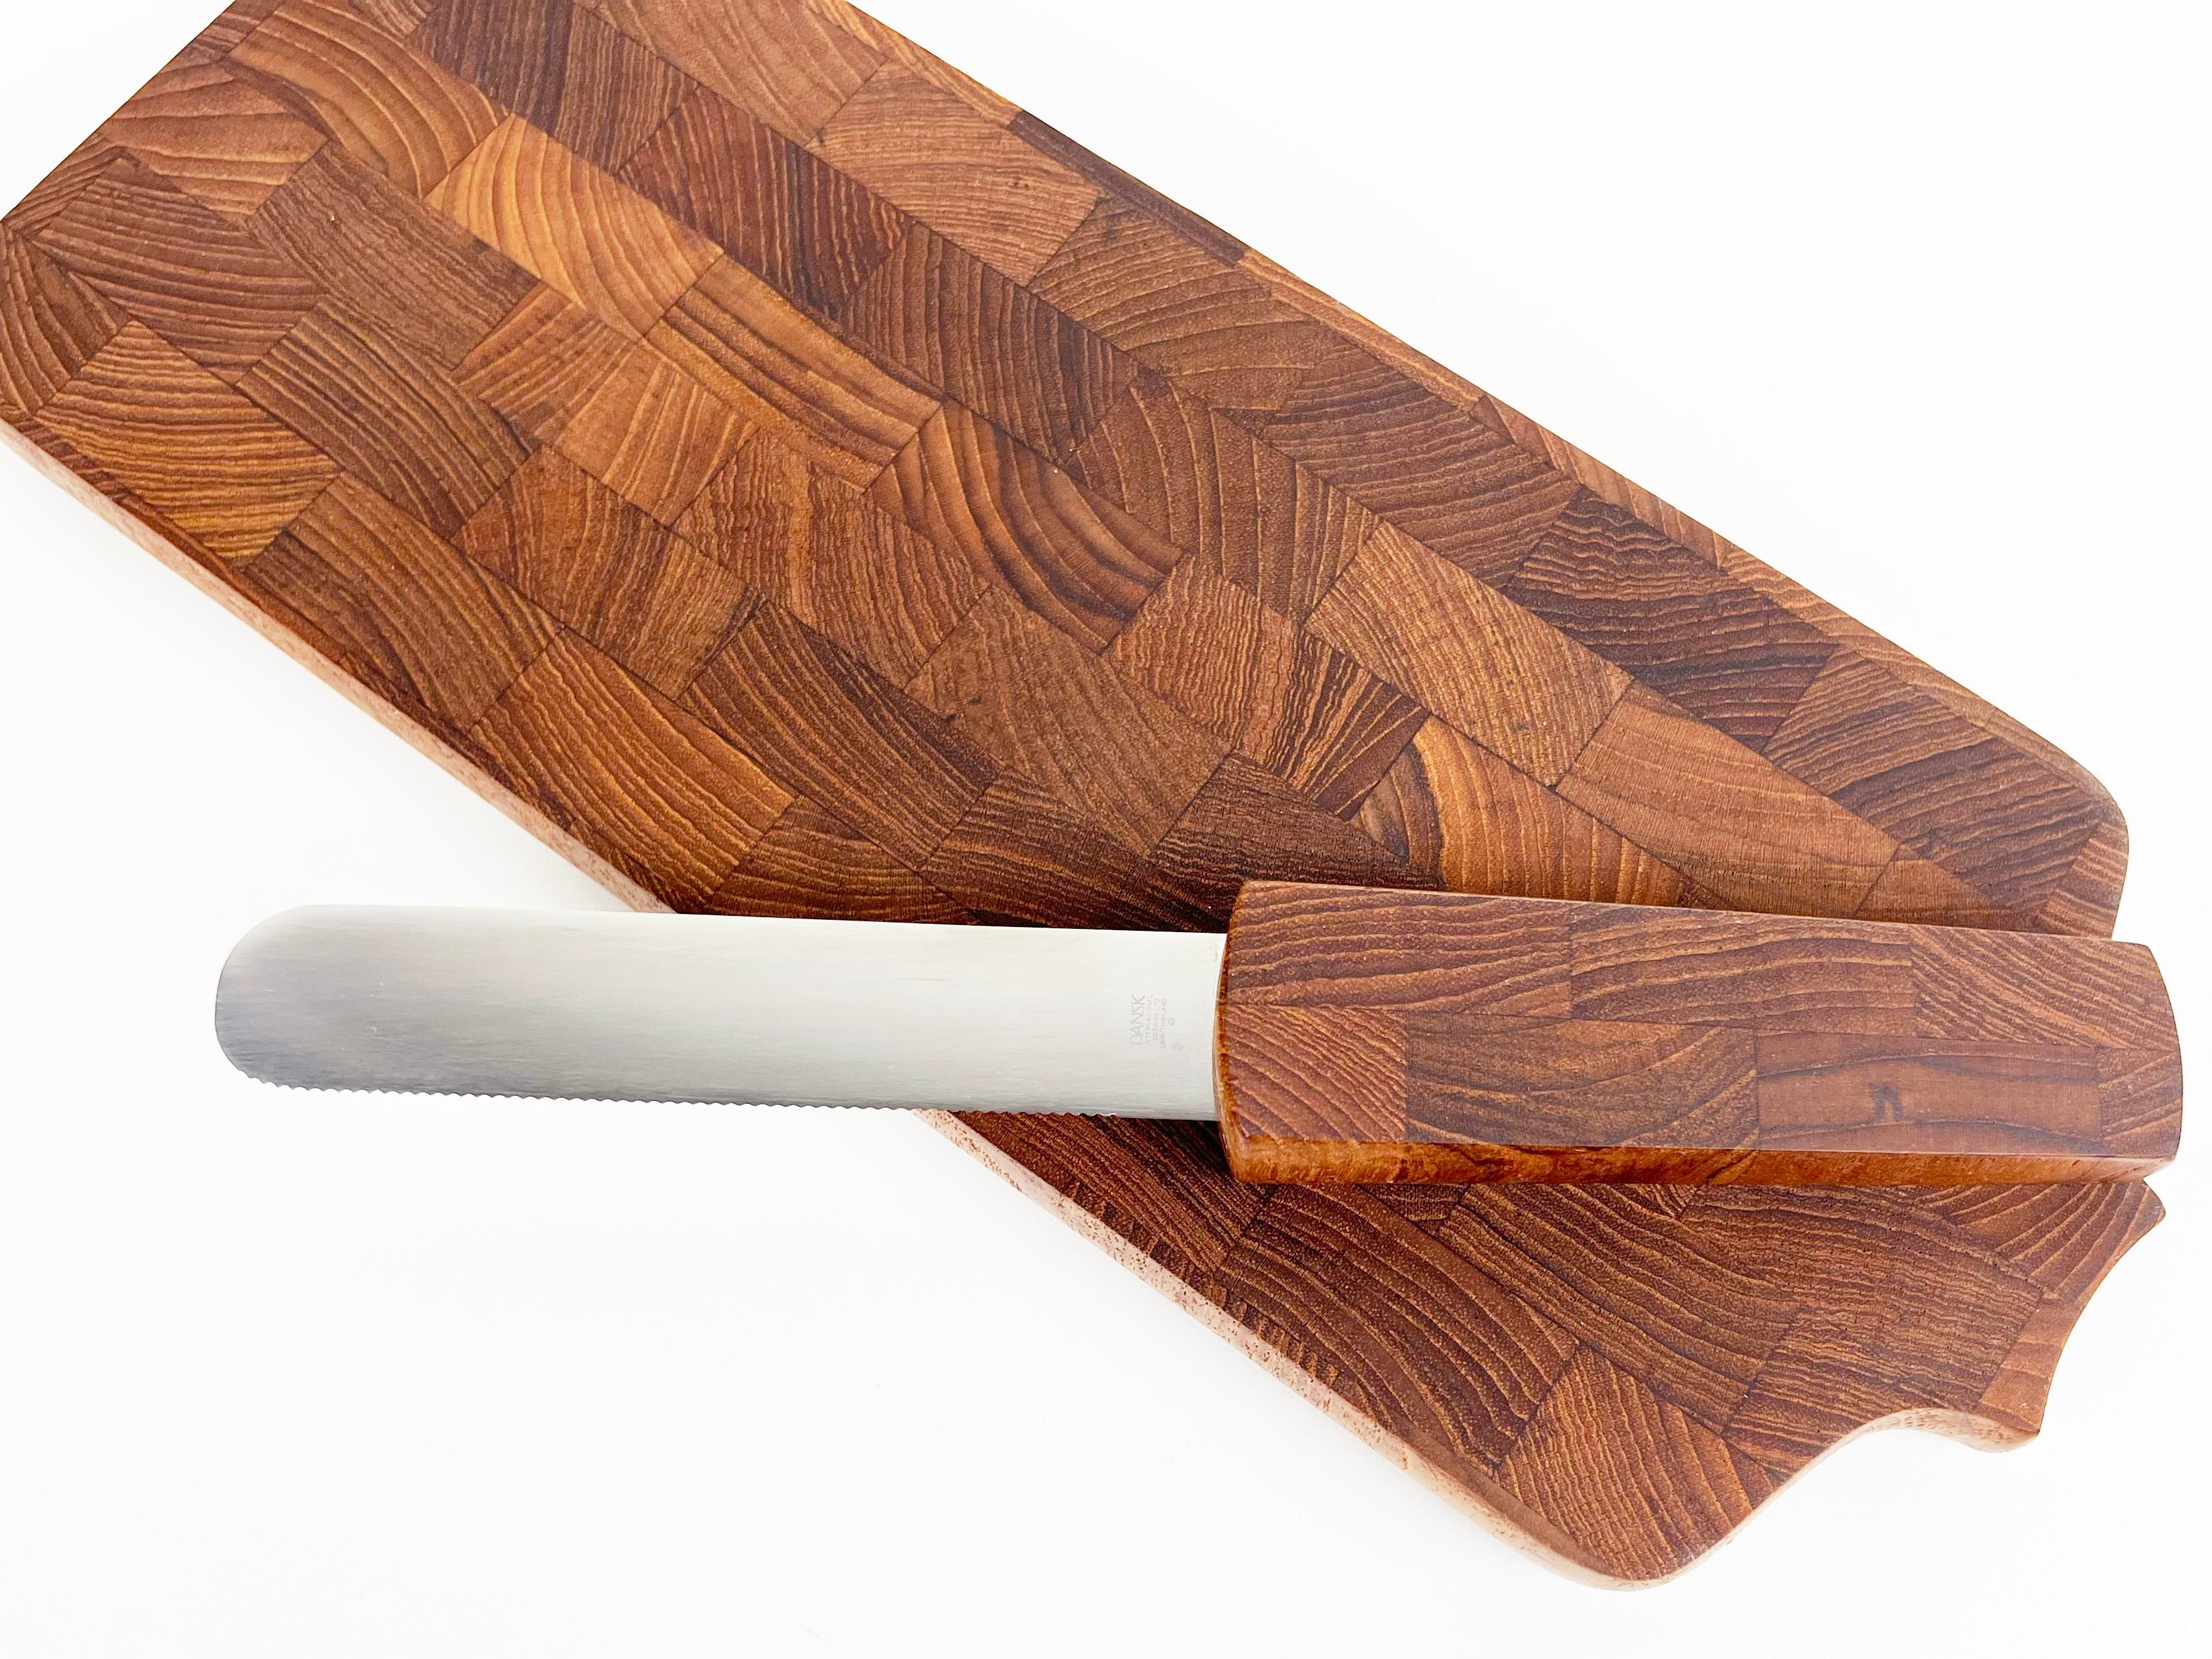 Dansk End Grain Teak Paddle Shaped Serving Board with Built in Knife In Excellent Condition For Sale In Fort Lauderdale, FL